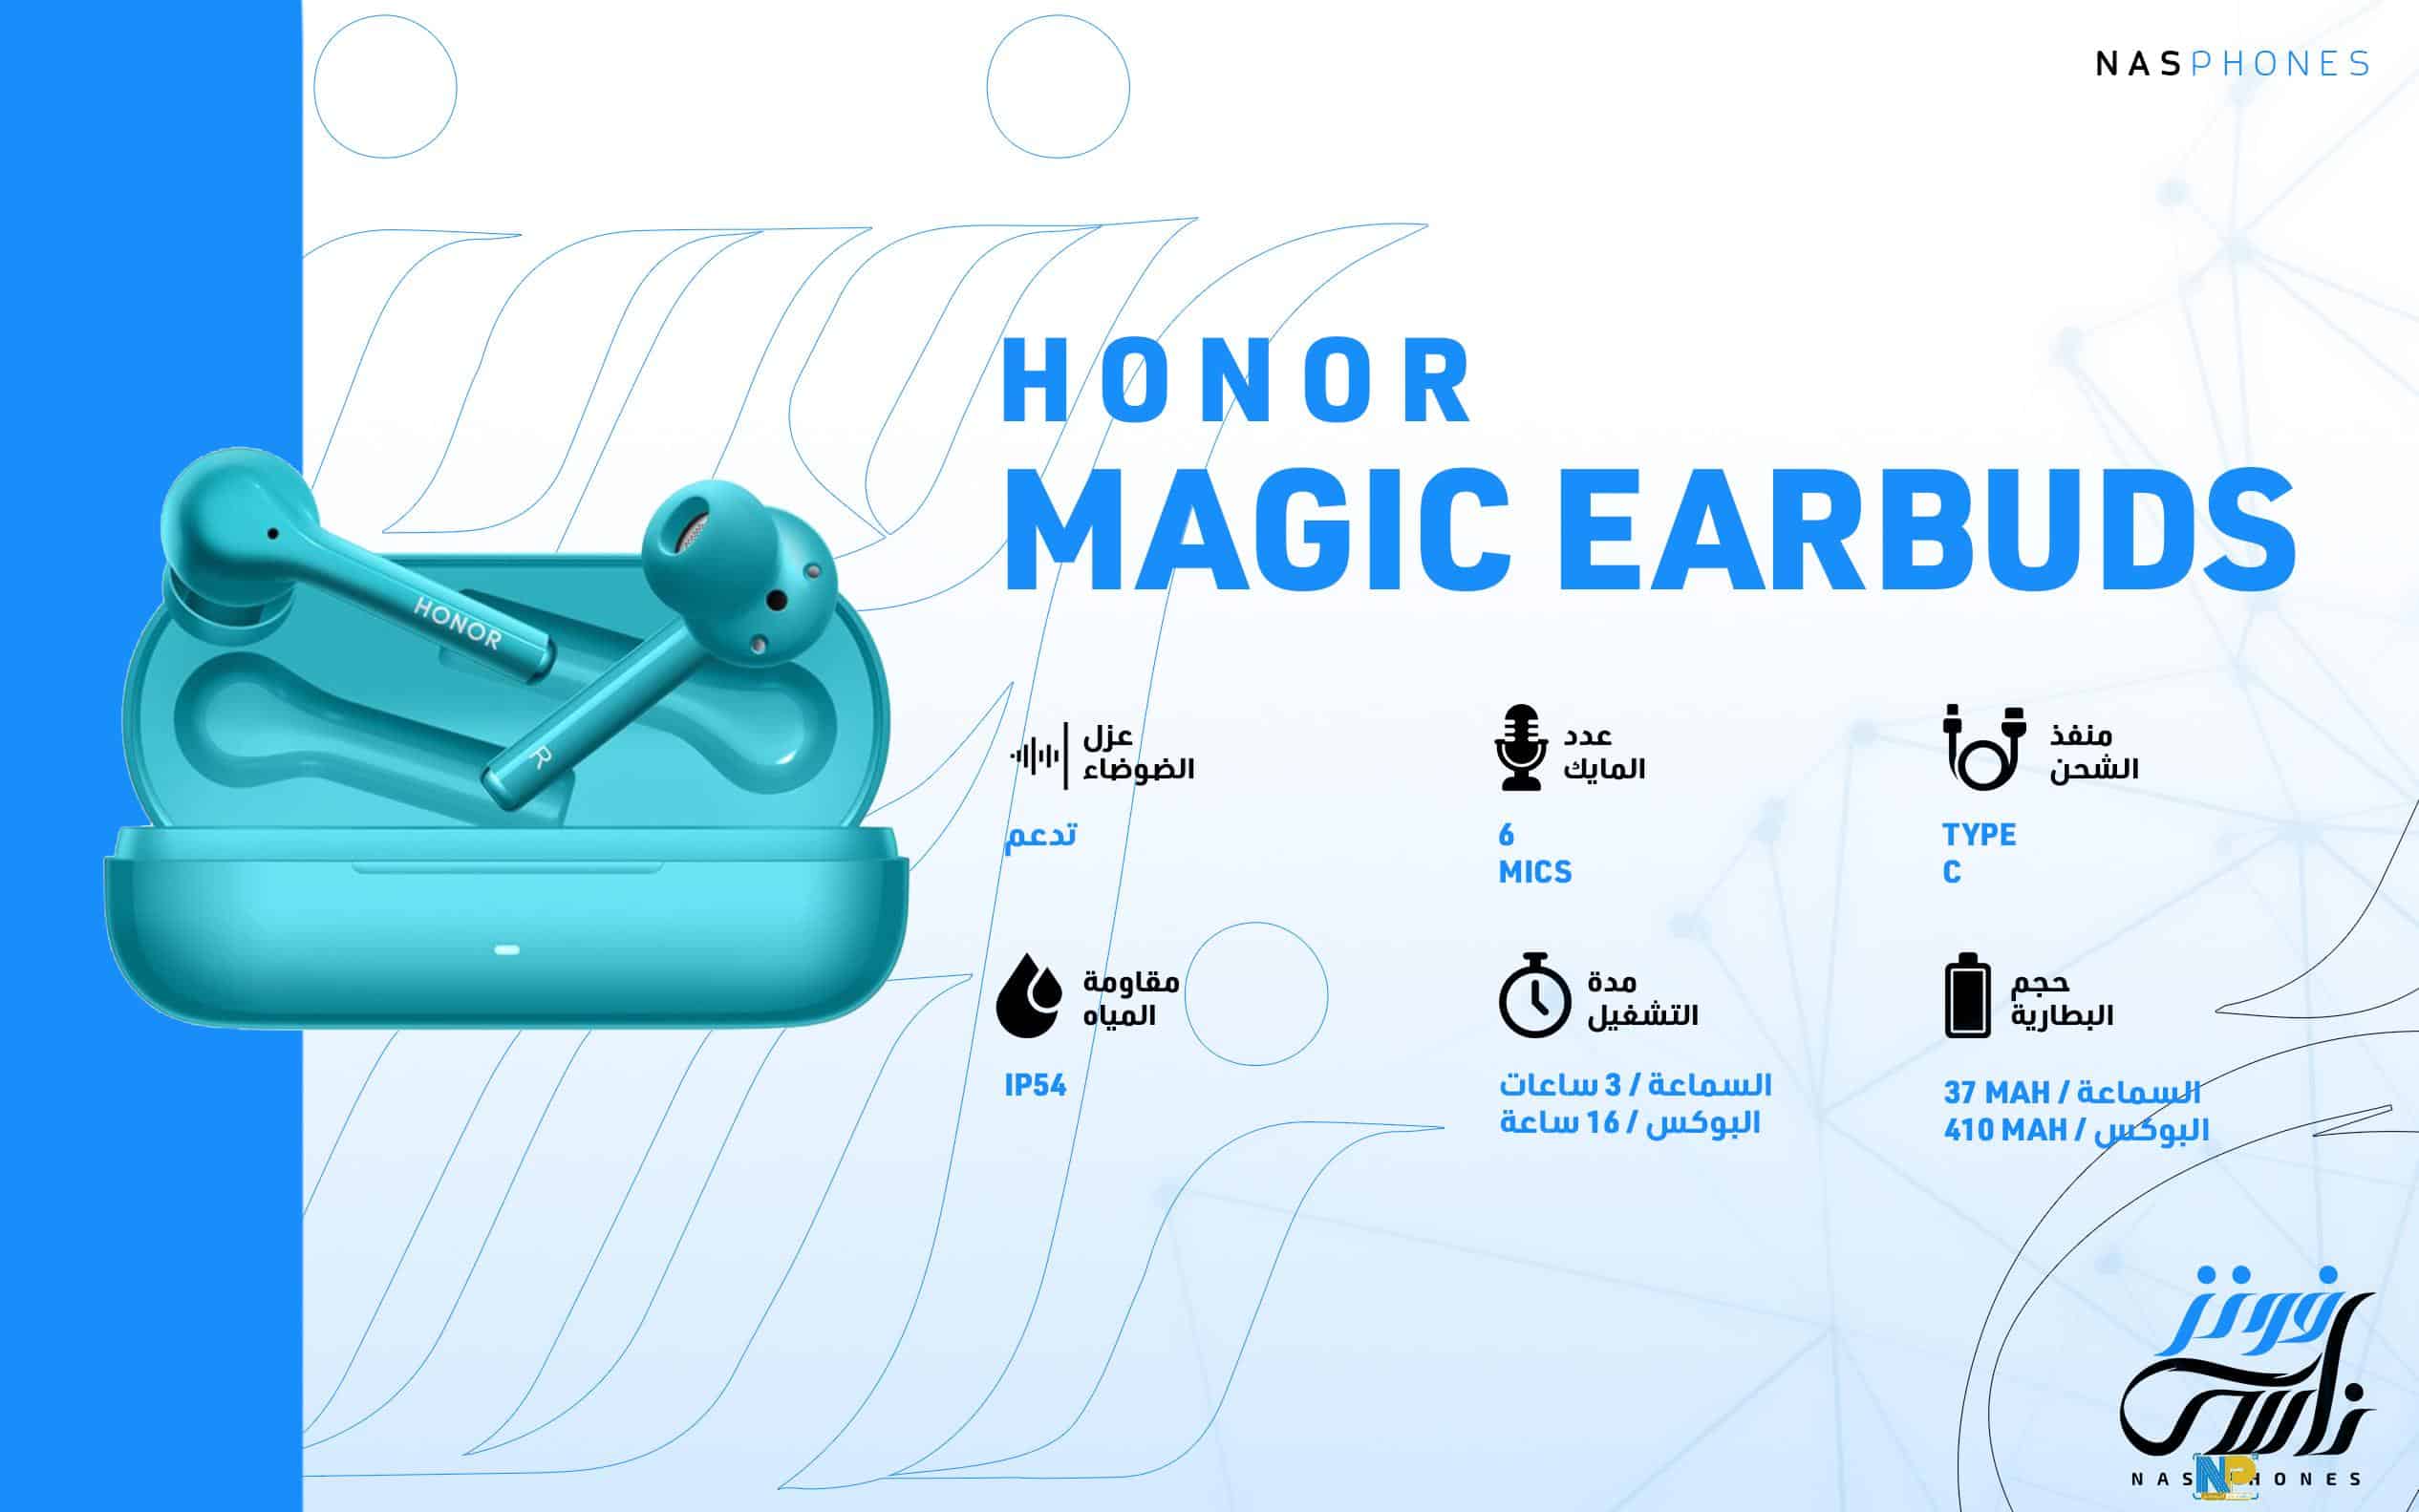 HONOR Magic Earbuds